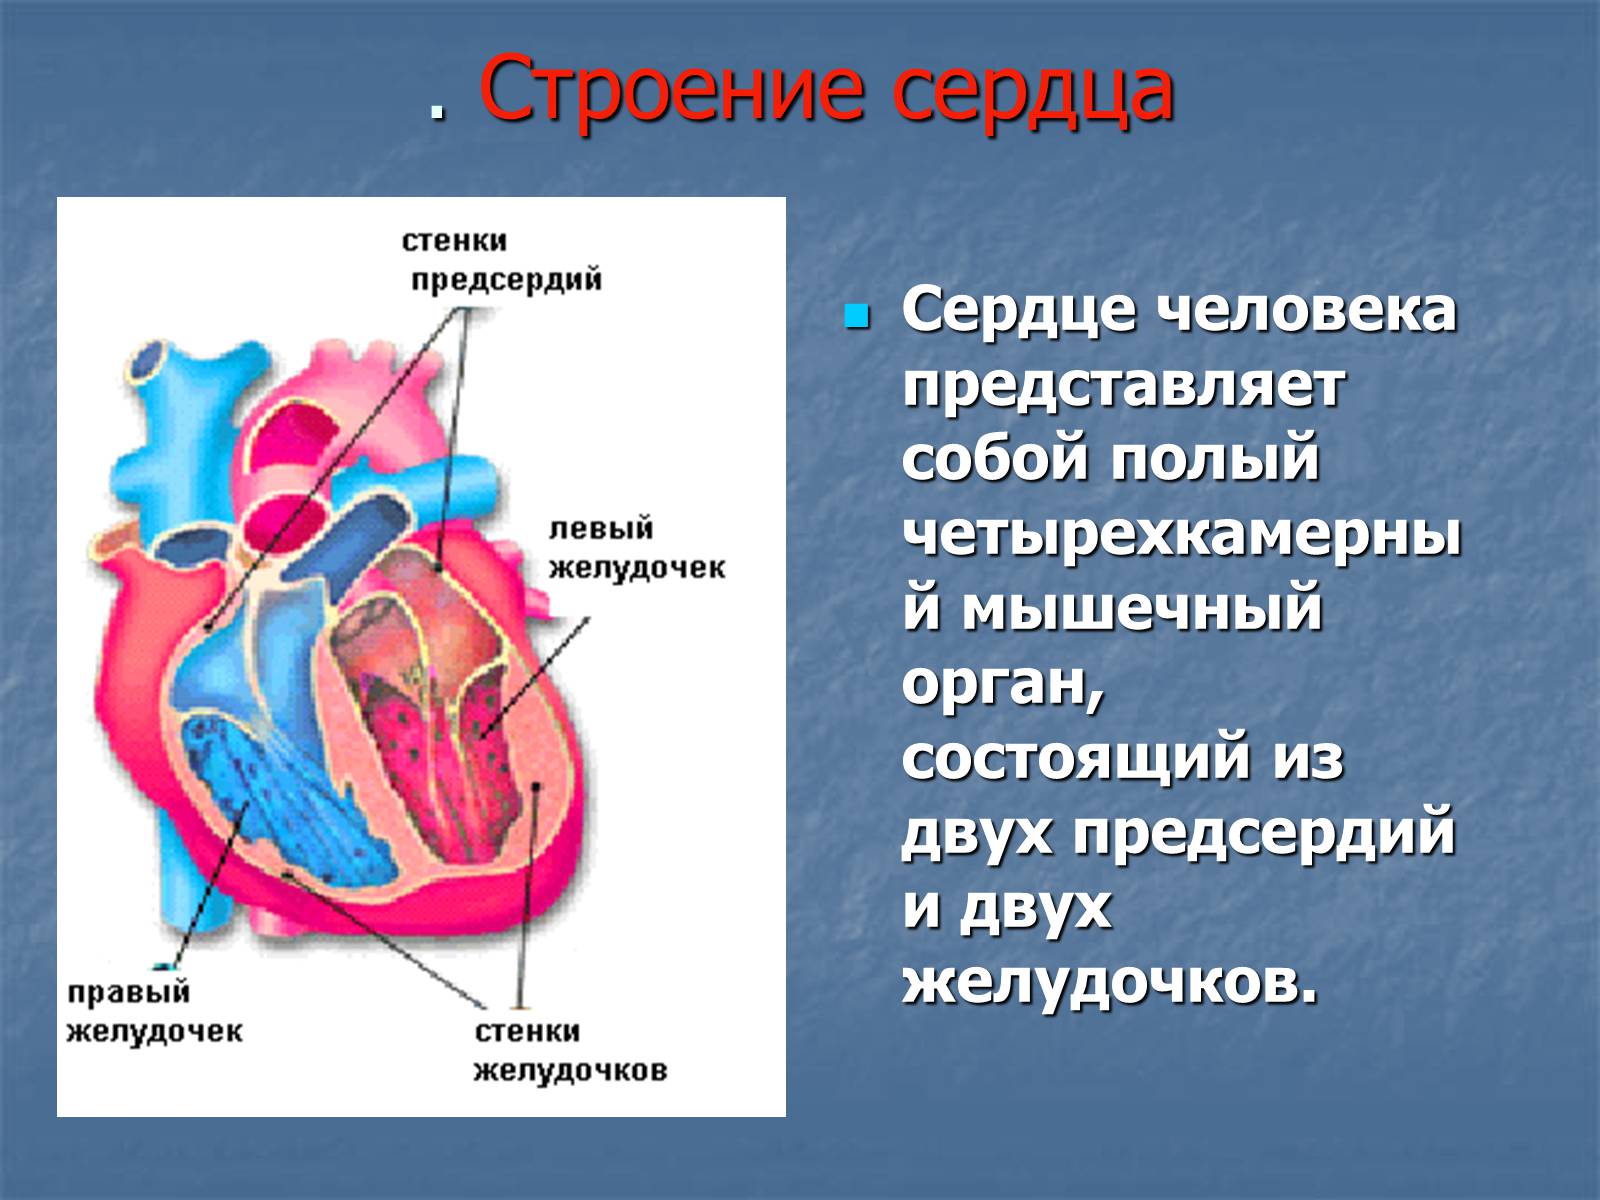 Предсердие желудка. Строение желудочков сердца анатомия. 2 Желудочка и 2 предсердия. Сердце анатомия желудочки и предсердия. Строение сердца человека желудочки и предсердия.